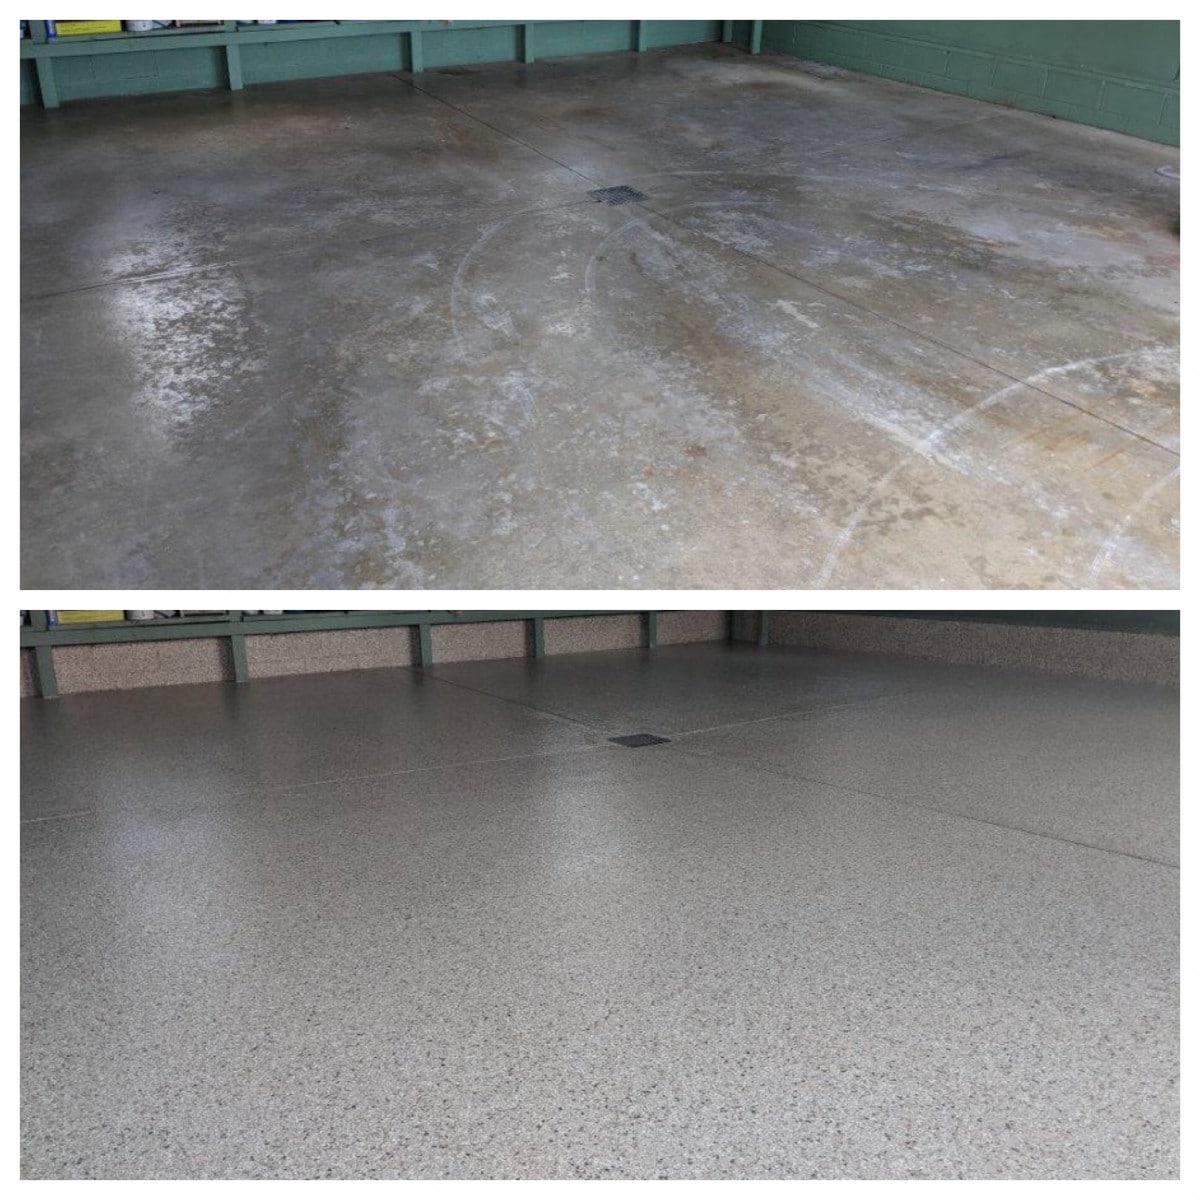 How To Remove Epoxy Coating From Tile Floor One Day Custom Floors Concrete Resurfacing Floor Coatings